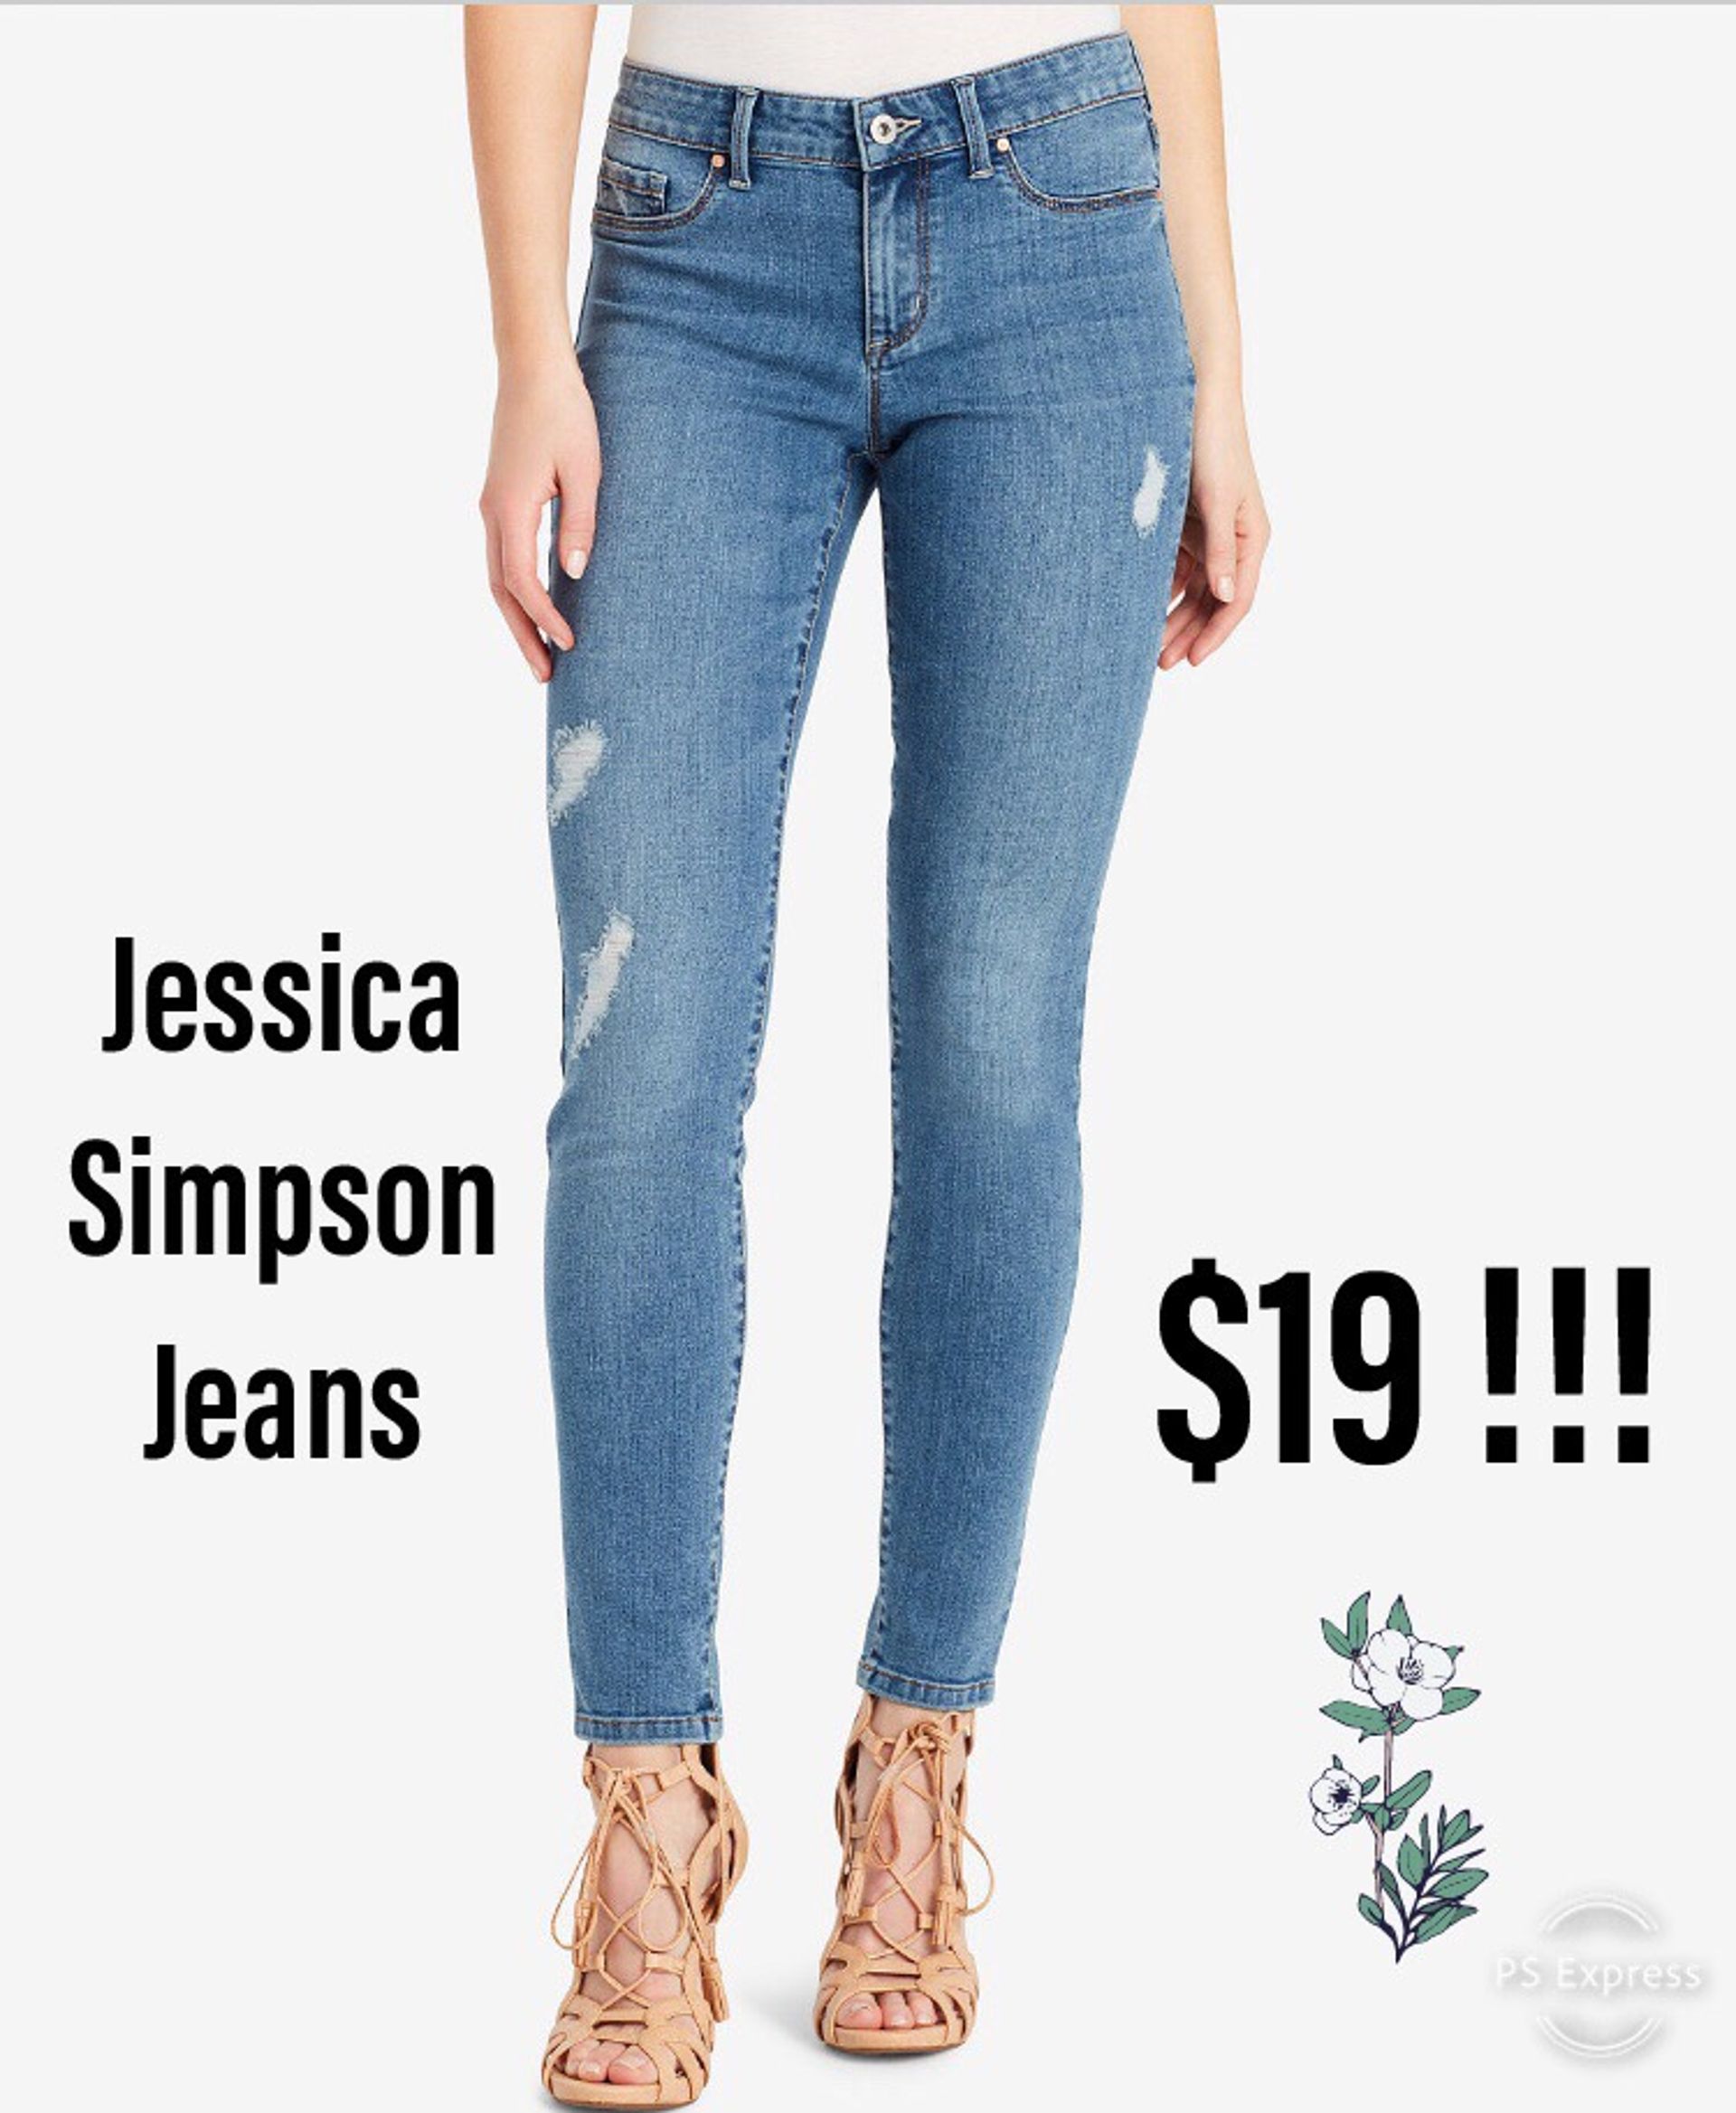 jessica simpson jeans